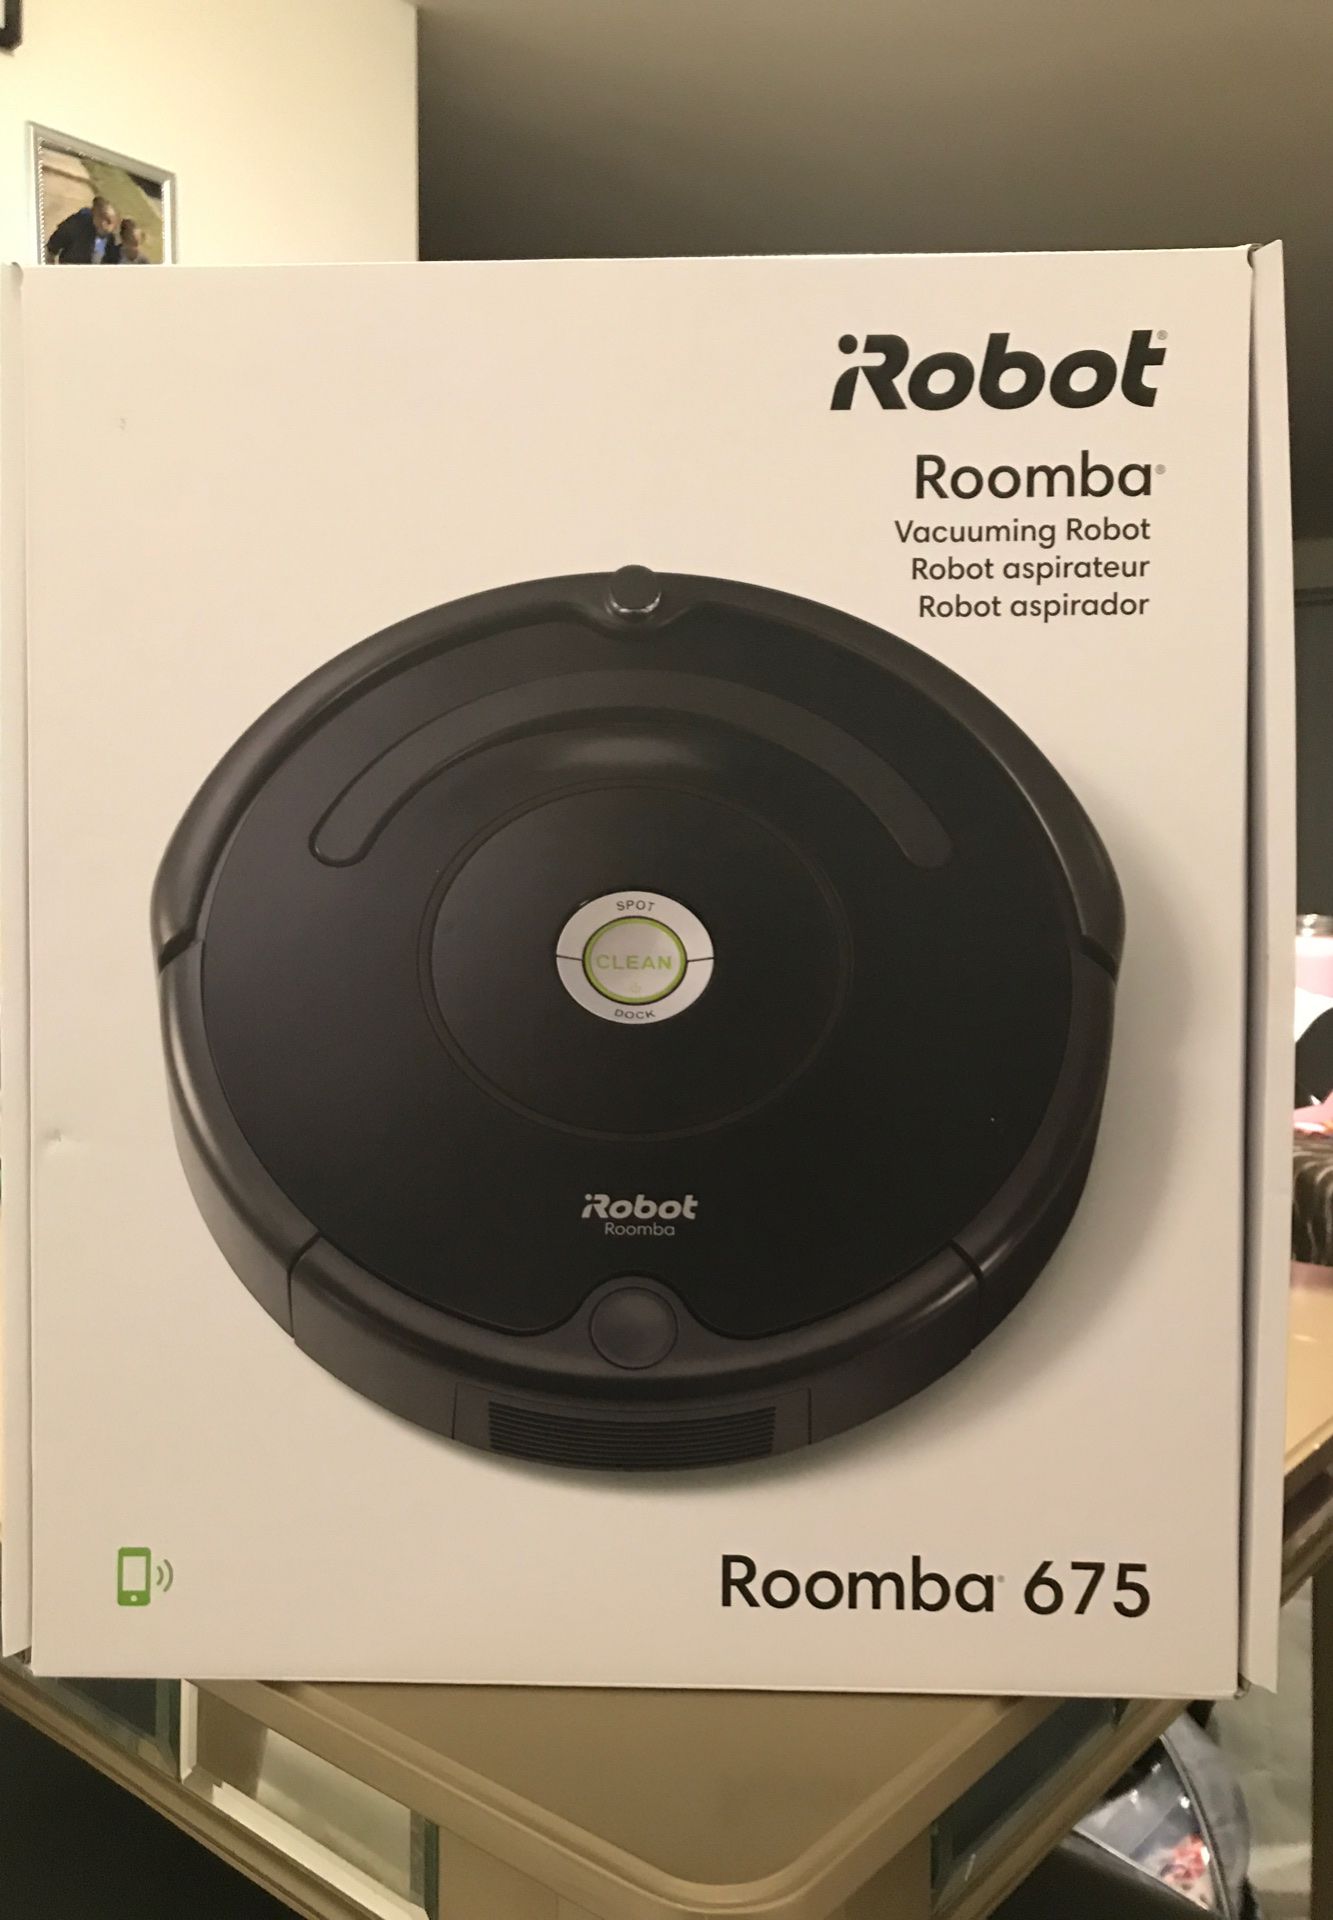 Roomba 675 Vacuuming Robot